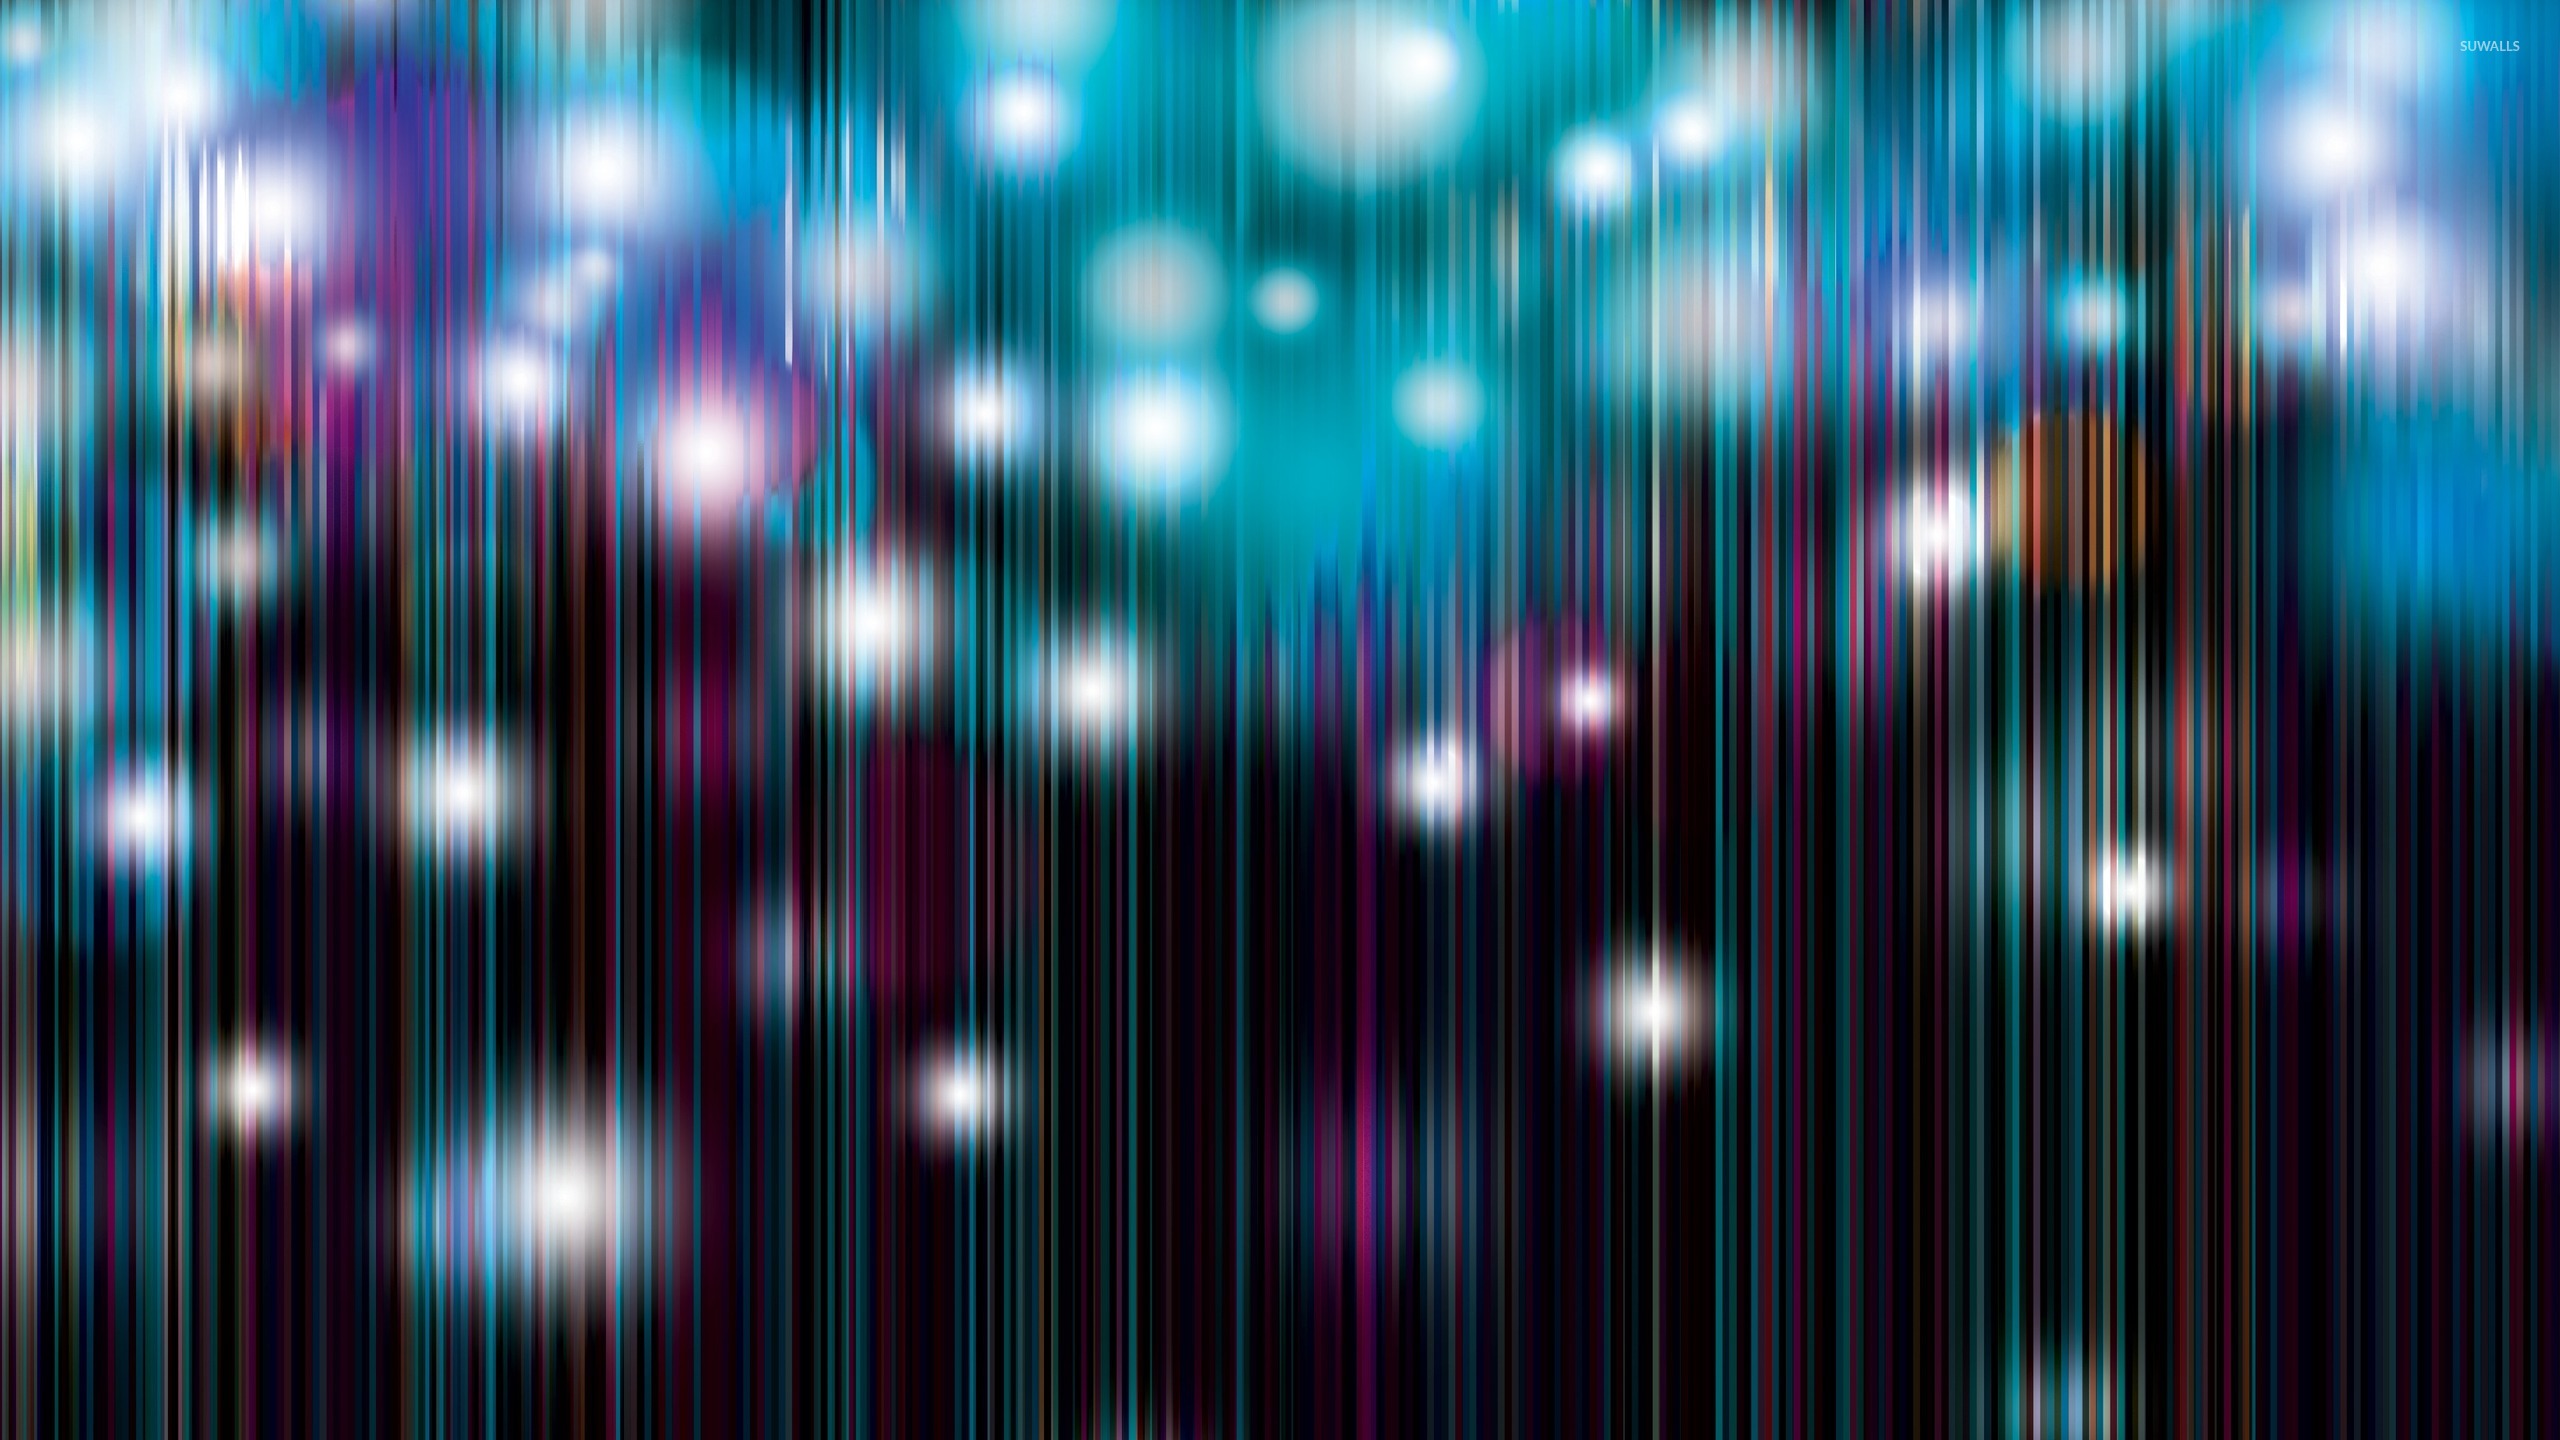 Disco Lights On A Colorful Wall Wallpaper Digital Art